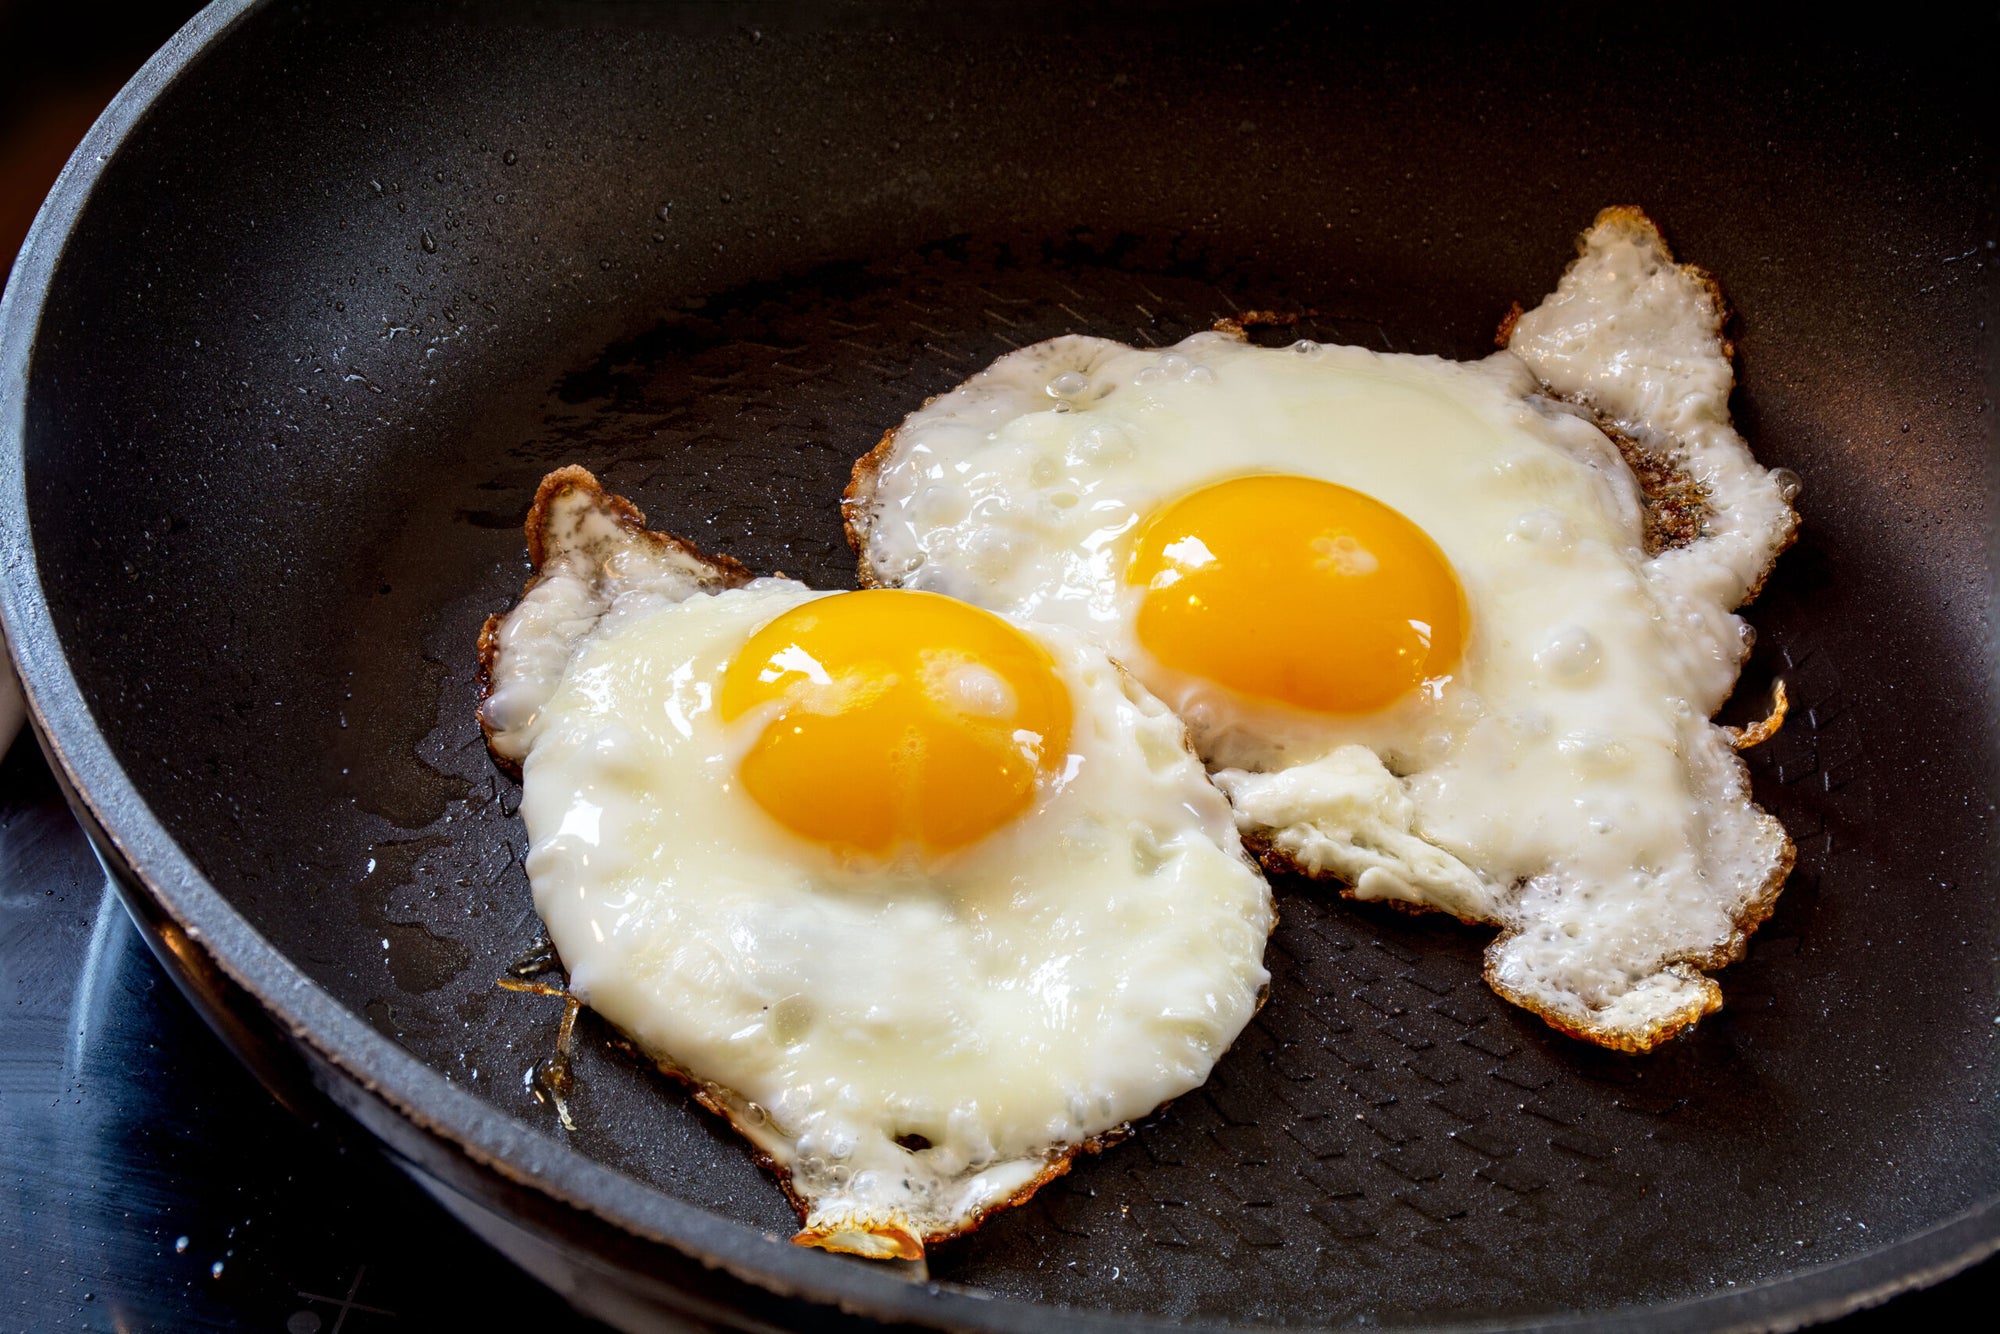 https://www.saveur.com/uploads/2022/06/30/00-LEAD-best-pans-for-eggs-saveur-scaled.jpg?auto=webp&width=2000&height=1334